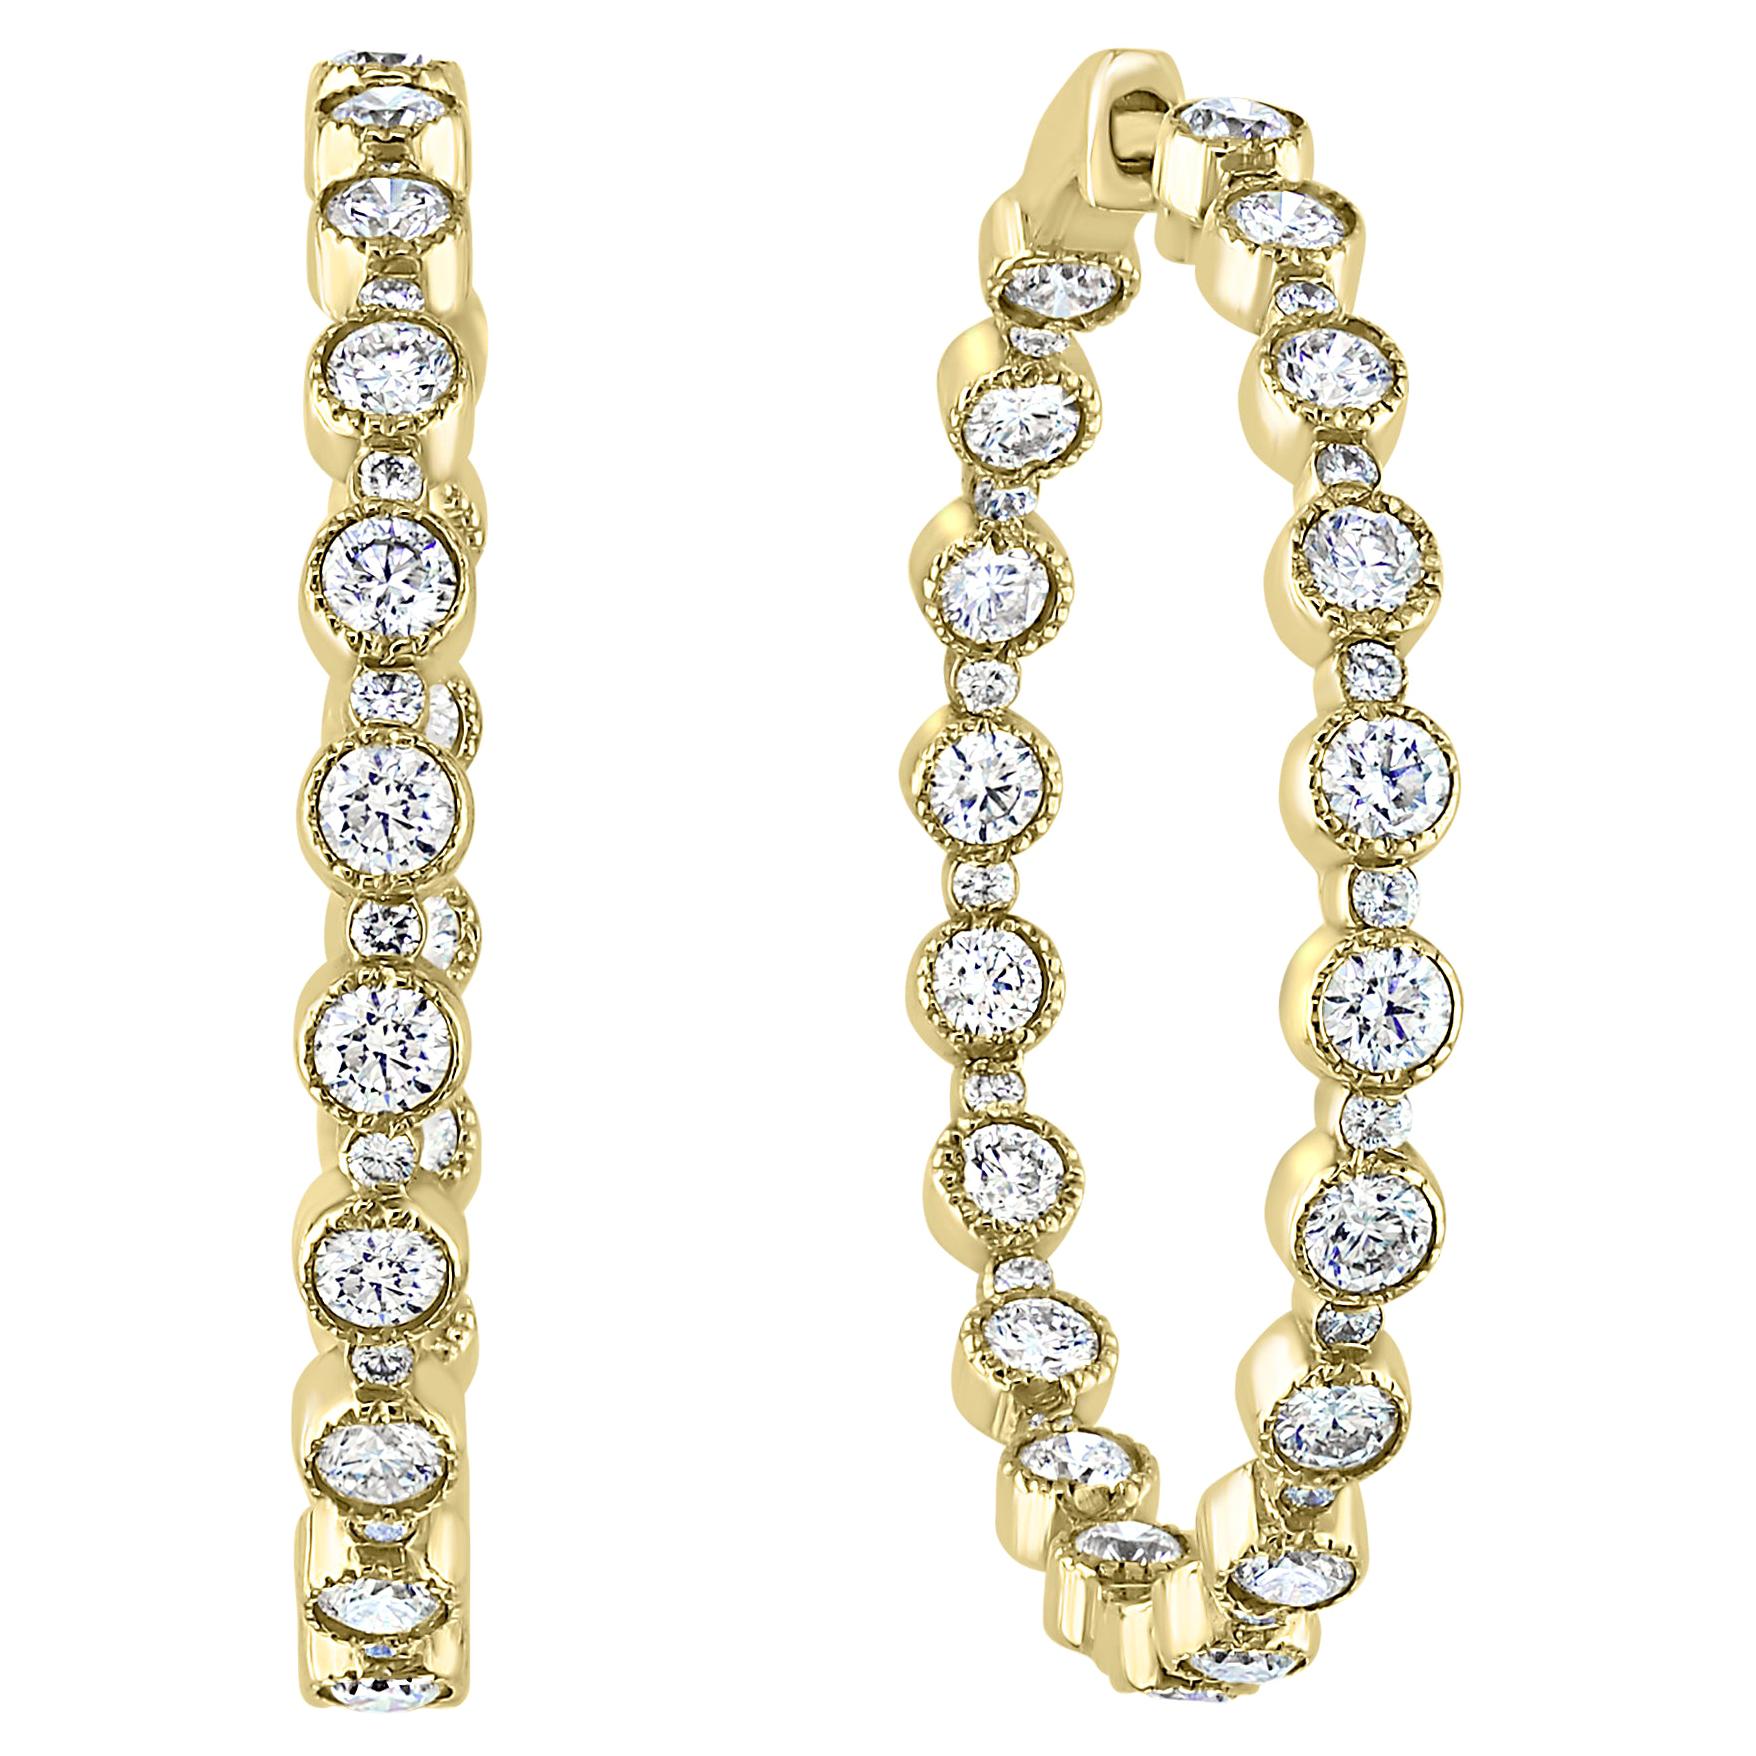 5.57 Carat Round Diamond Hoop Earrings in 14K Yellow Gold For Sale